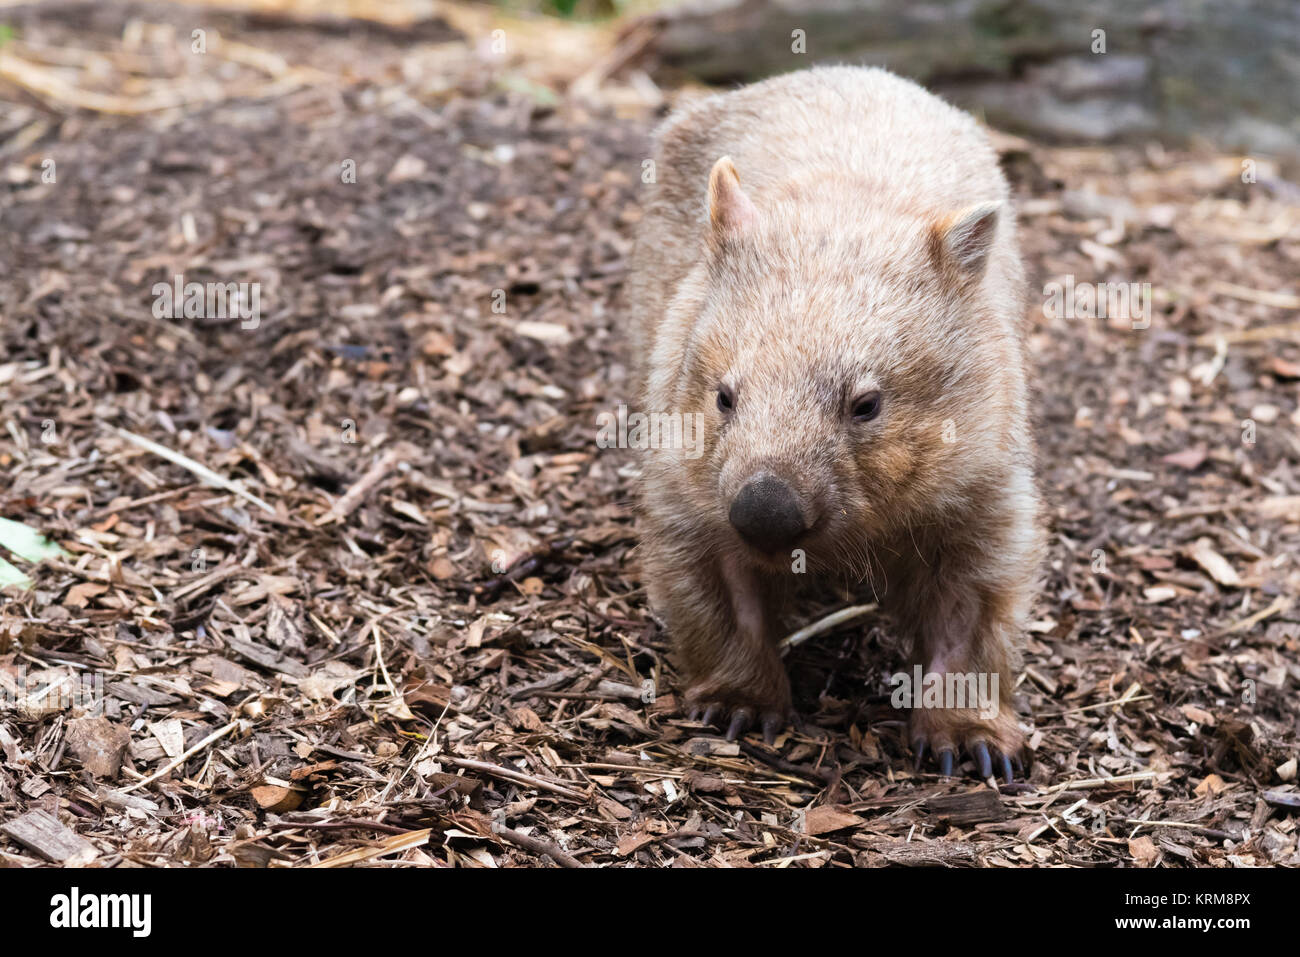 Close-up on an wombat, Australian native animal Stock Photo